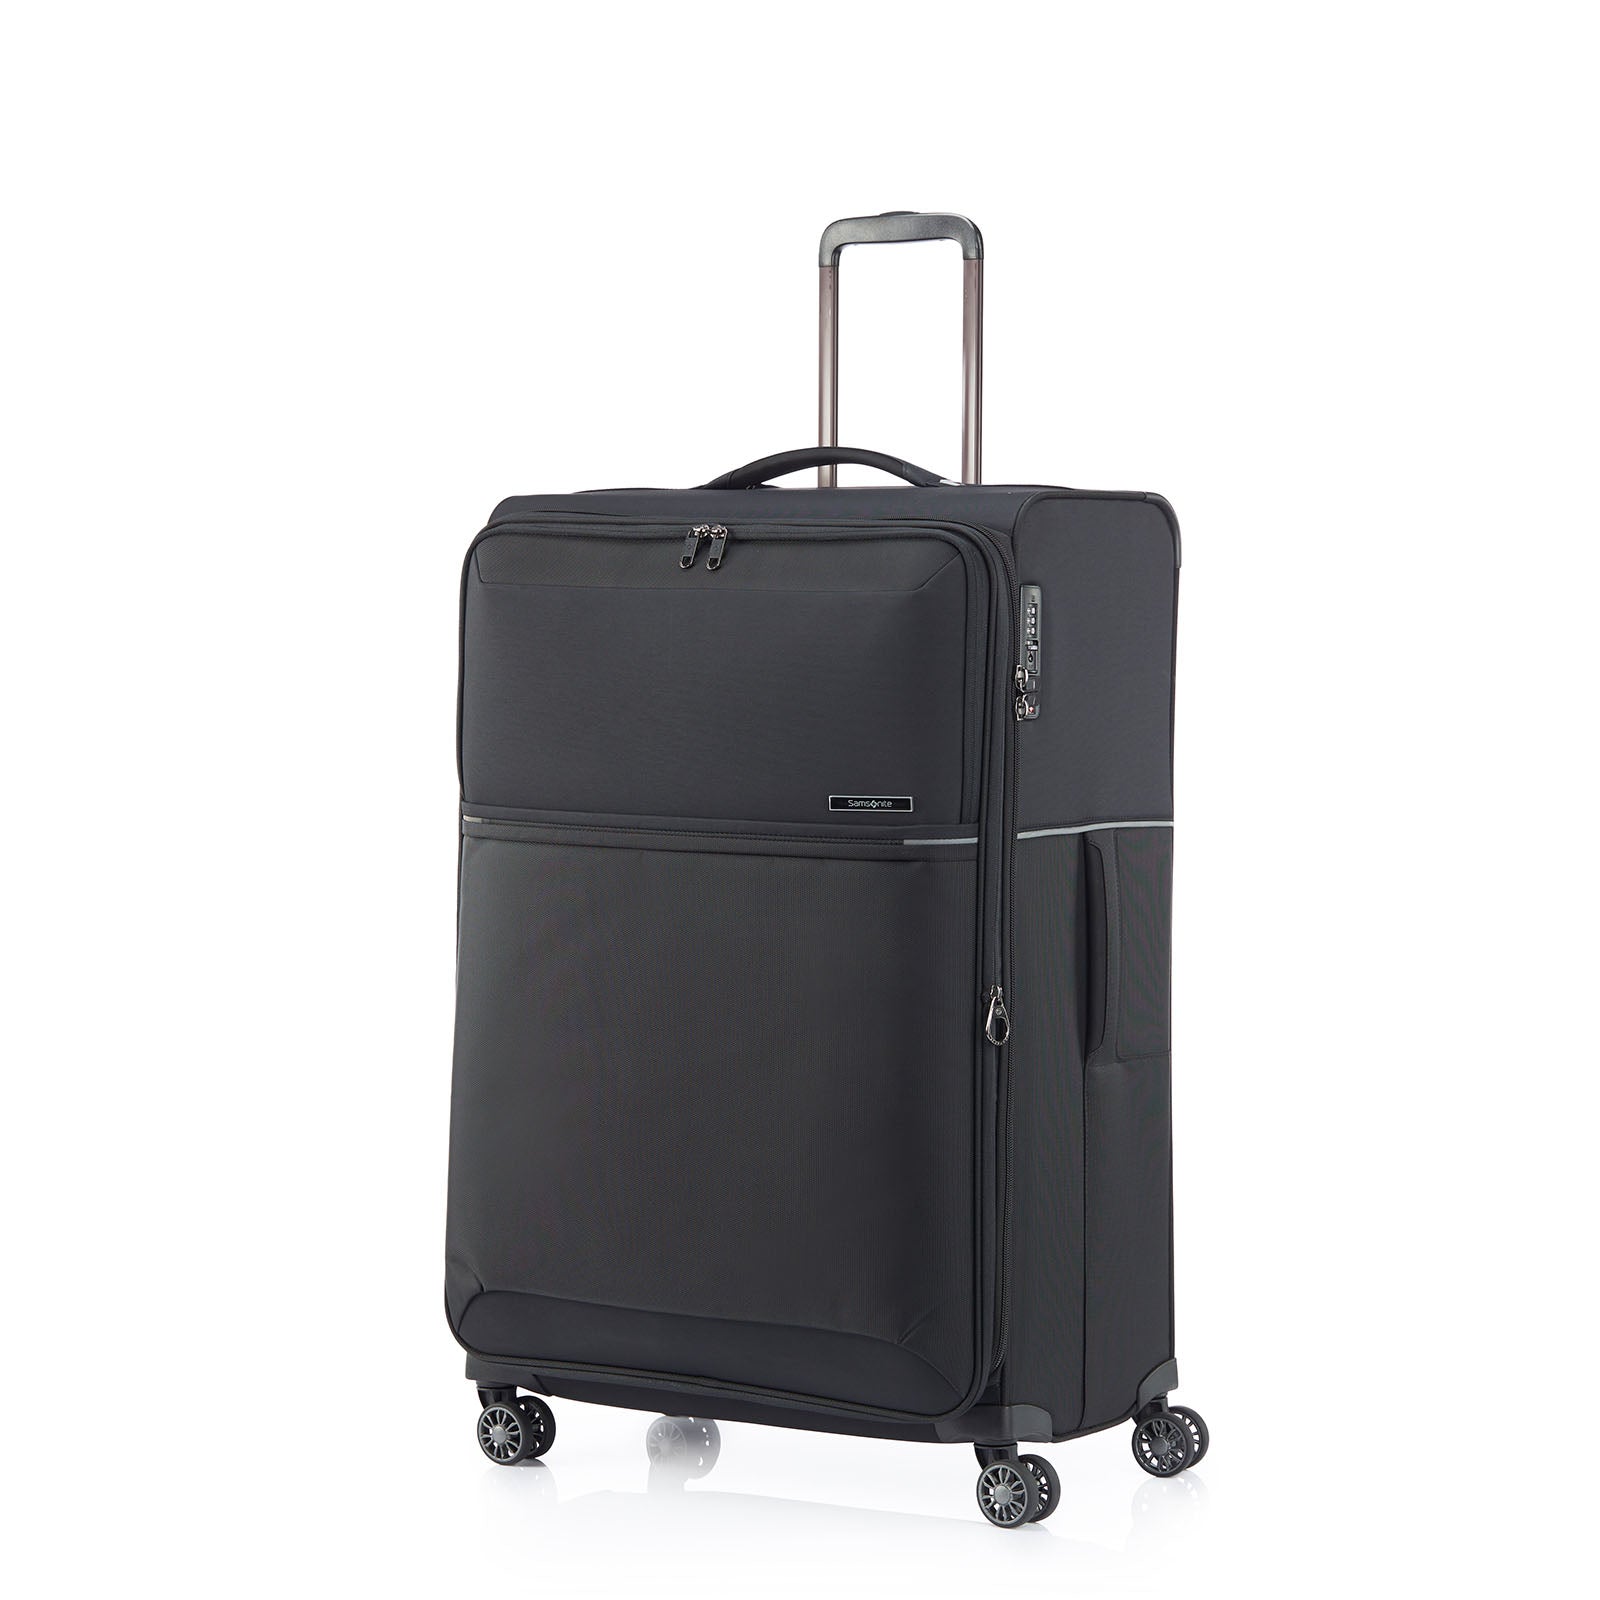 Samsonite-73h-78cm-Suitcase-Black-Front-Angle